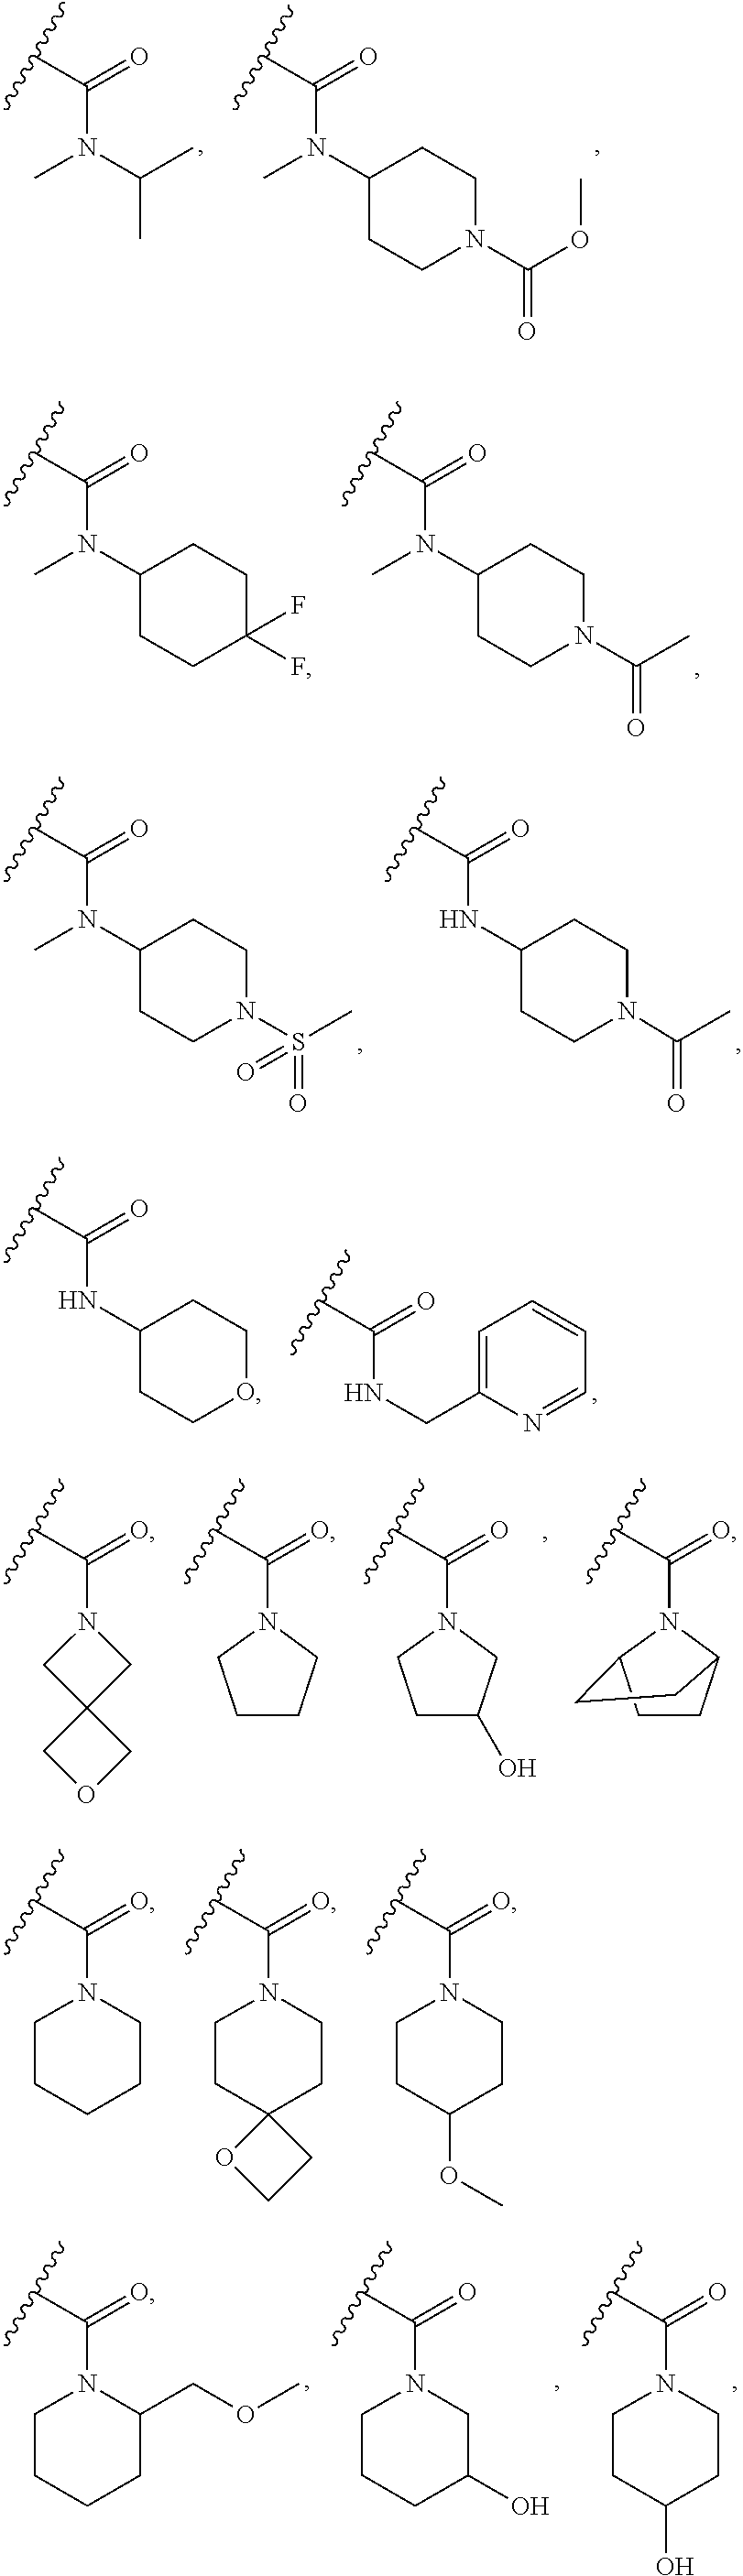 Tetrahydroisoquinoline derived prmt5-inhibitors